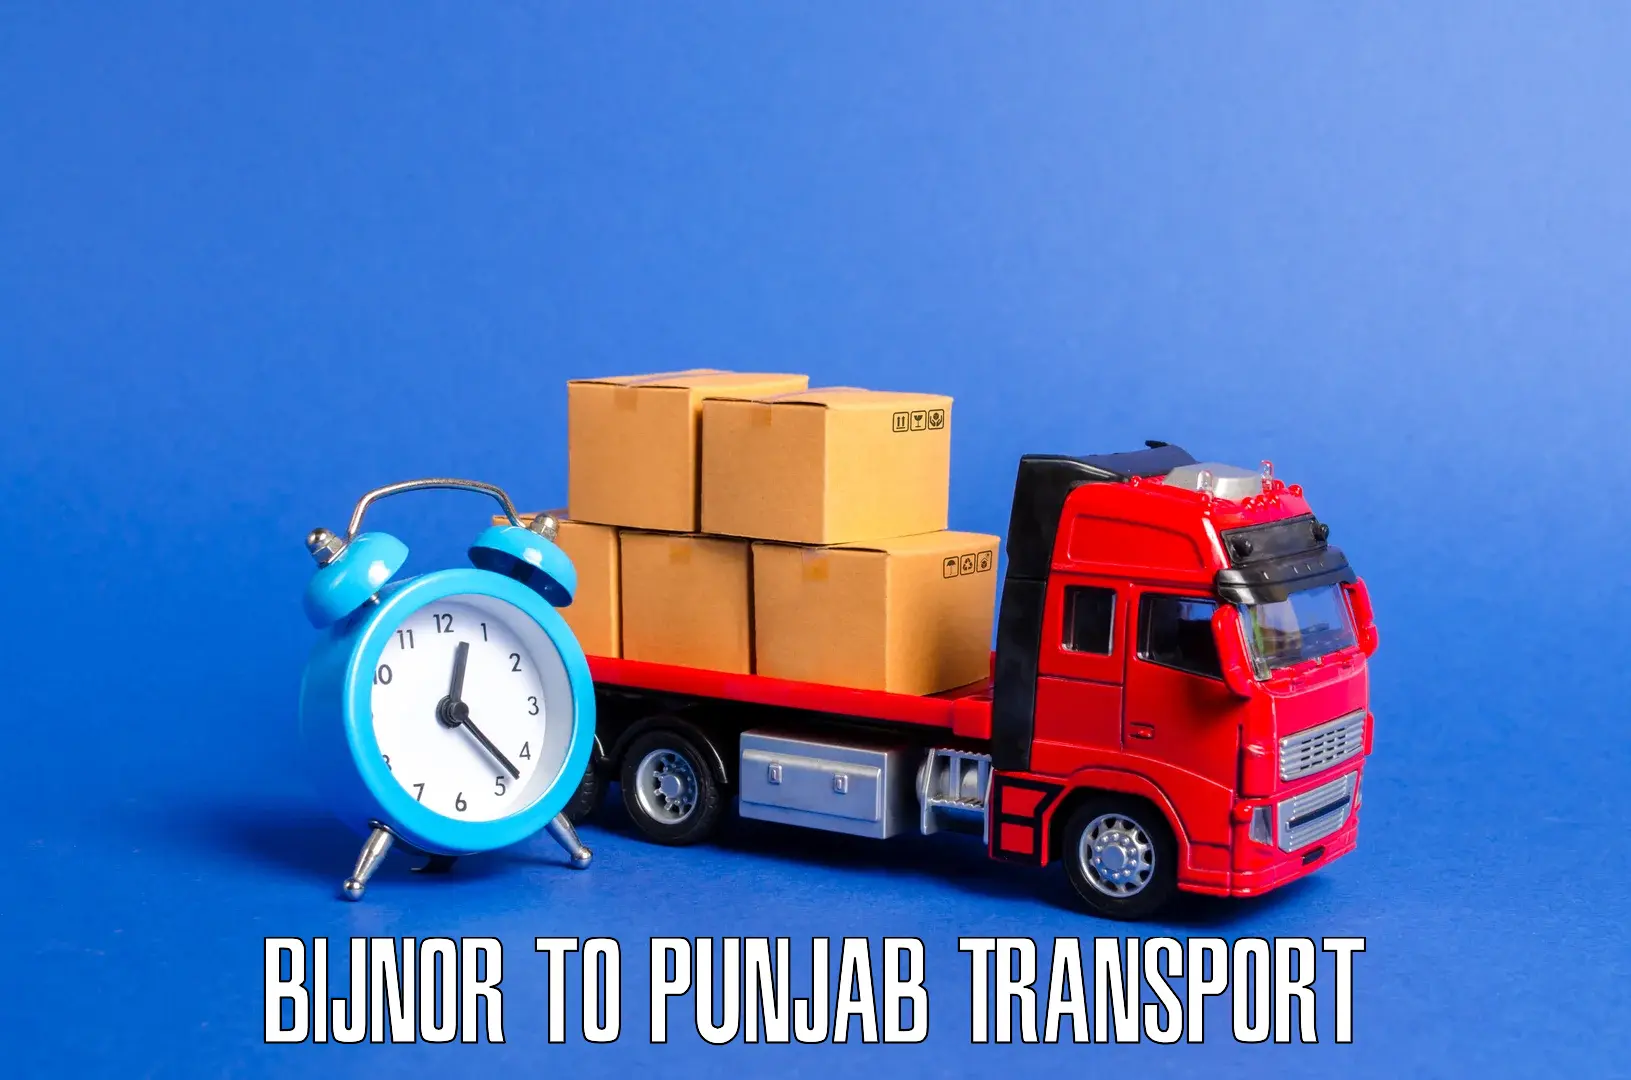 Transport shared services Bijnor to Sunam